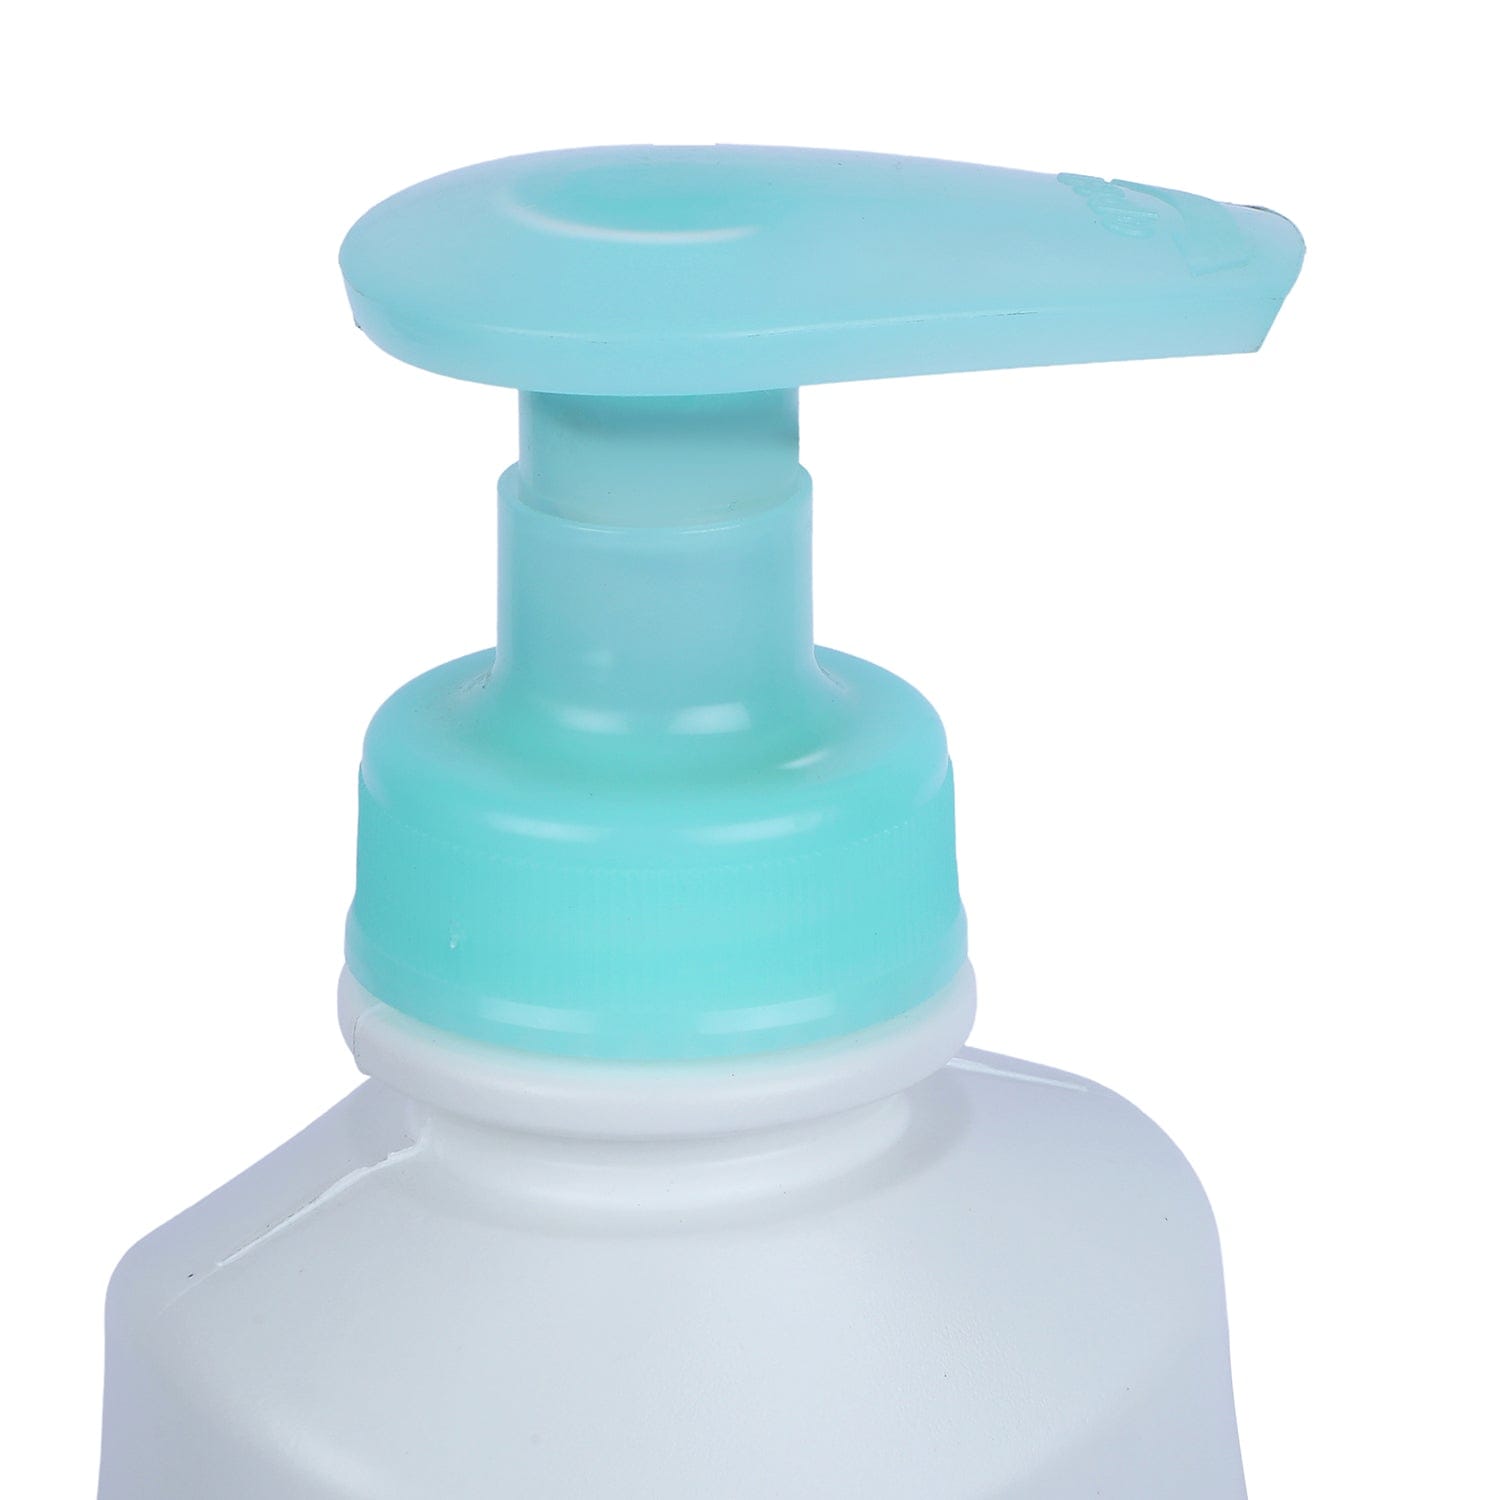 Baby Dove Sensitive Skin Care Head to Toe Wash - 400 ml - Baby Moo